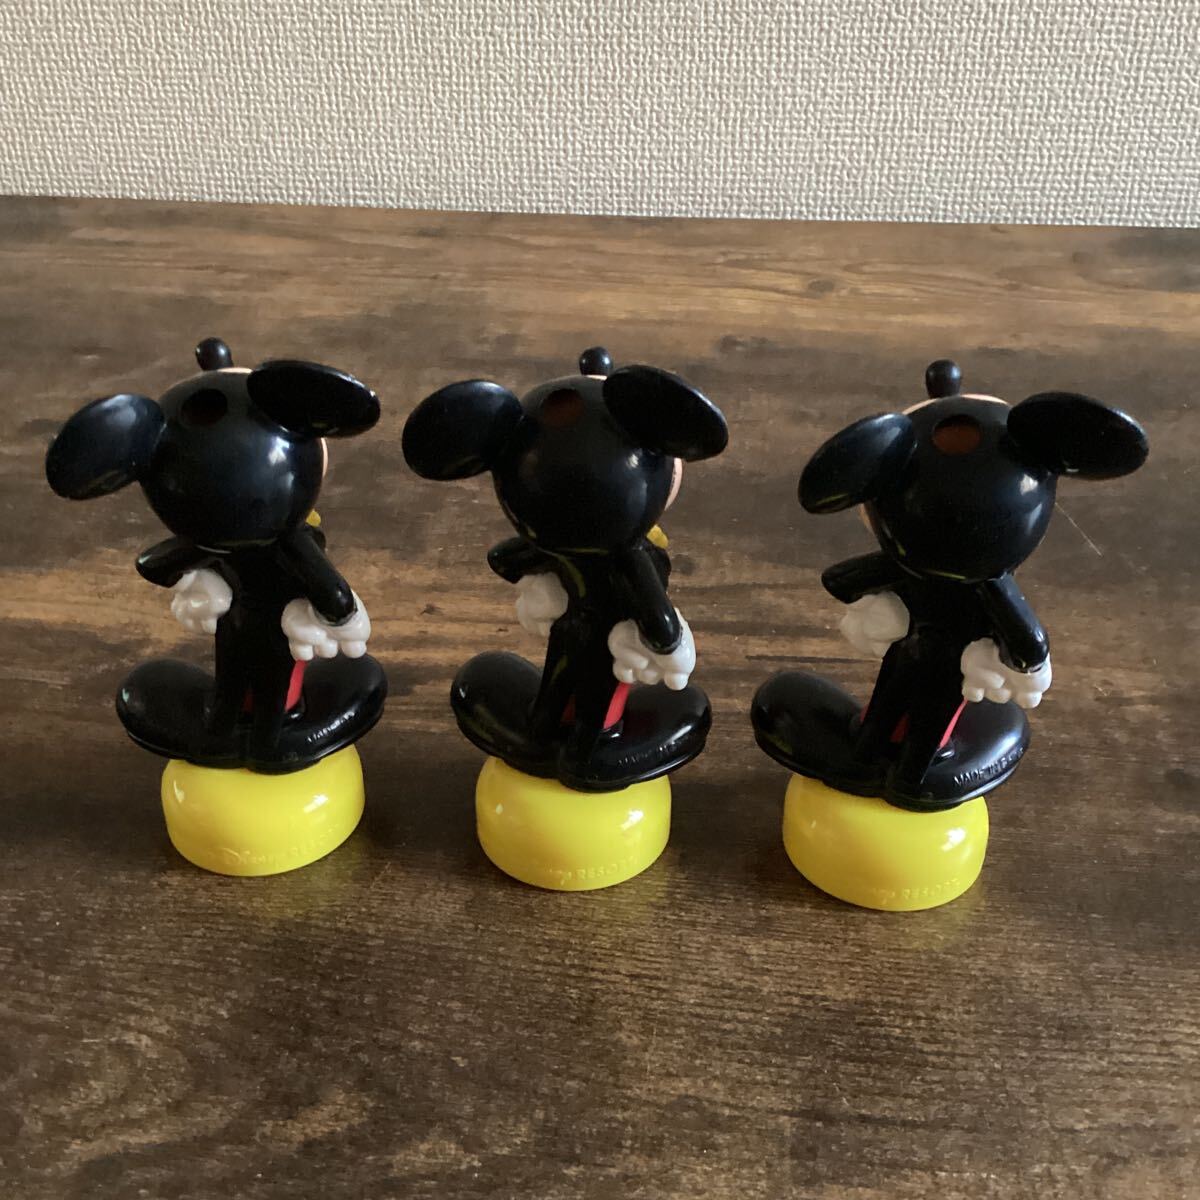 K1251) Disney Mickey фигурка продажа комплектом Mickey Mouse кукла общая длина примерно 12cm украшение интерьер б/у товар 